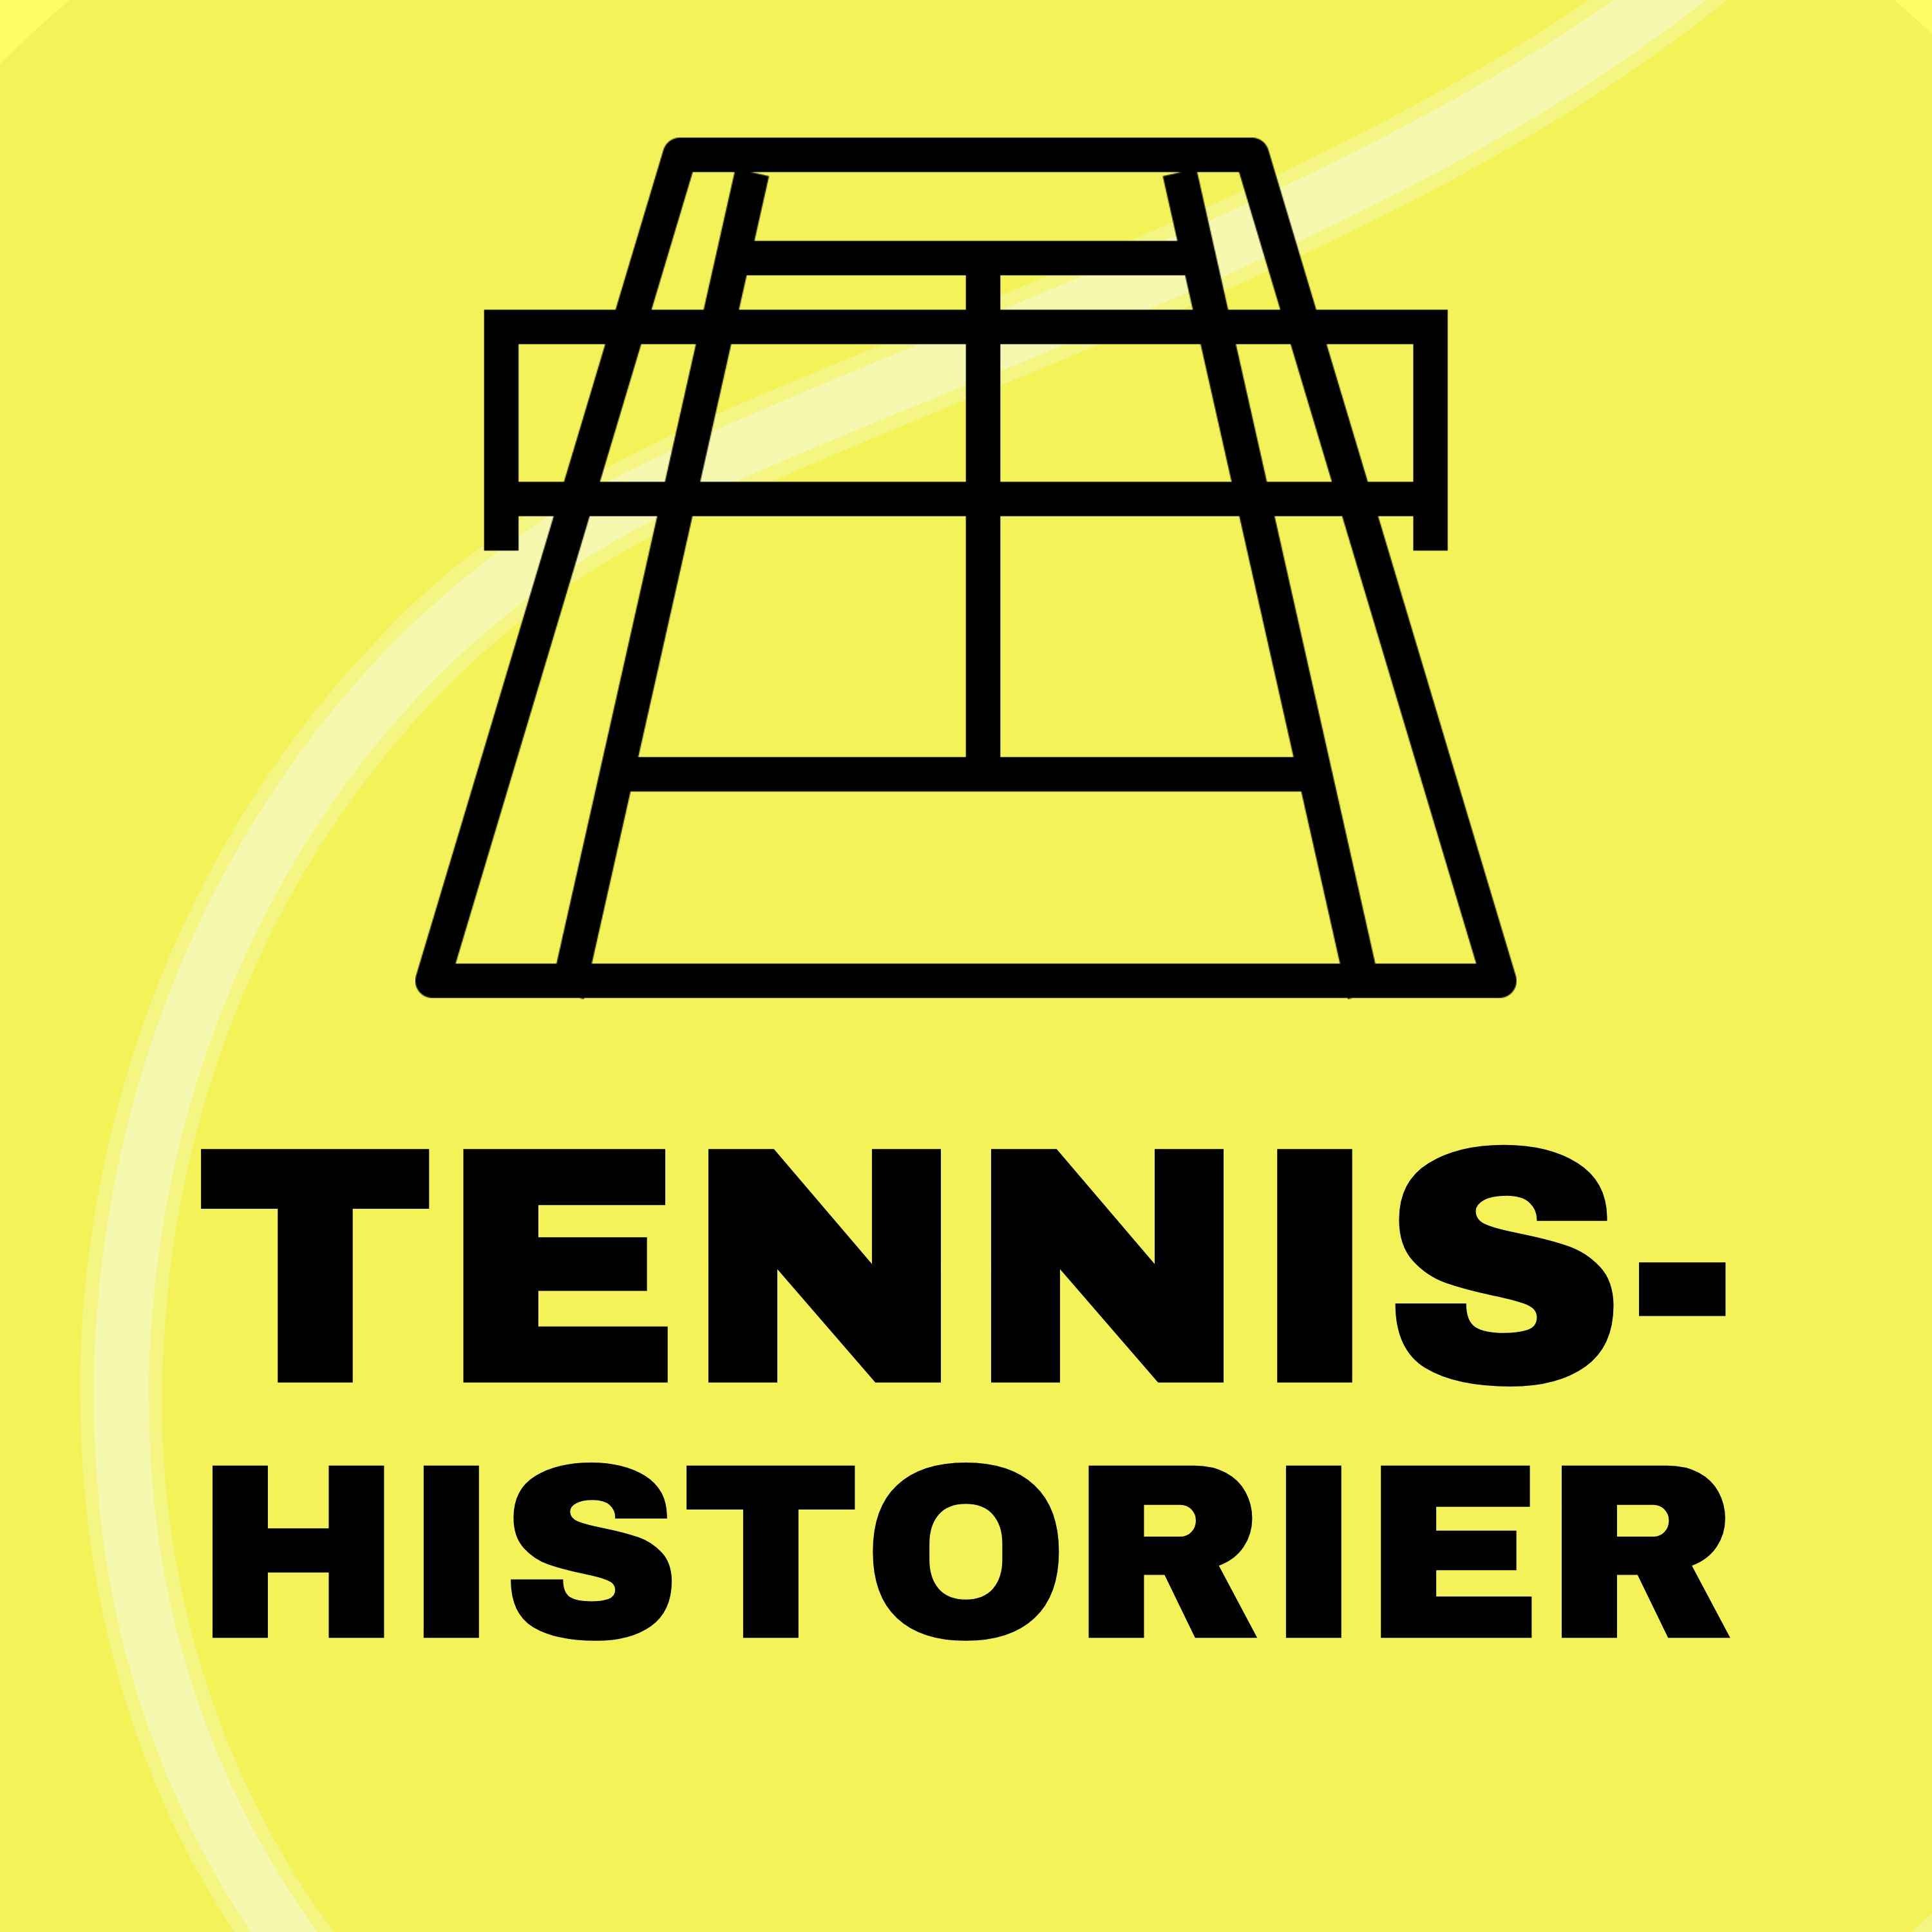 Tennishistorier